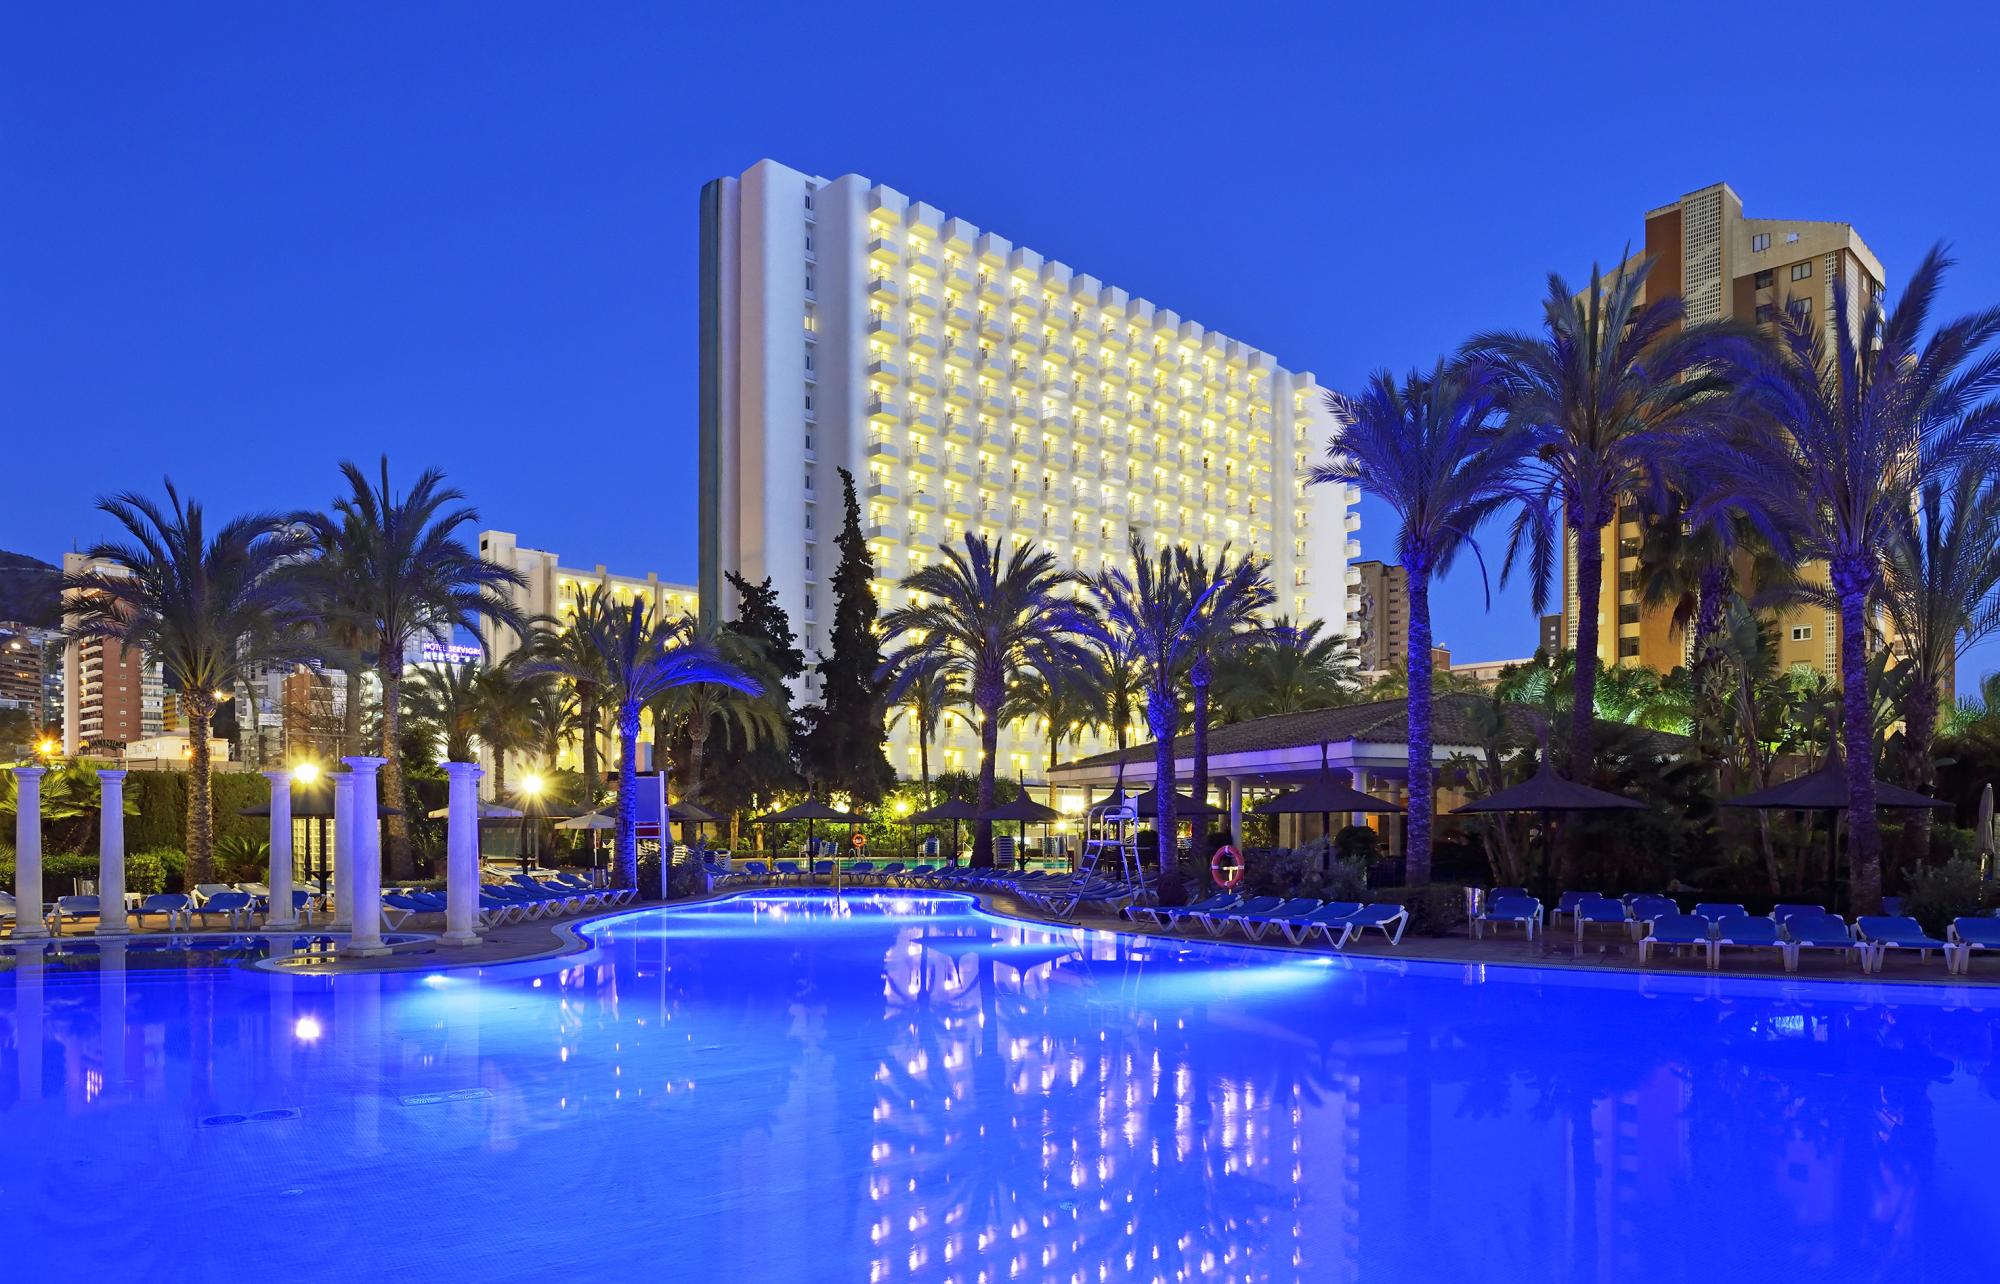 The Sol Pelicanos Ocas Hotel's impressive hotel situated in fantastic Costa Blanca.